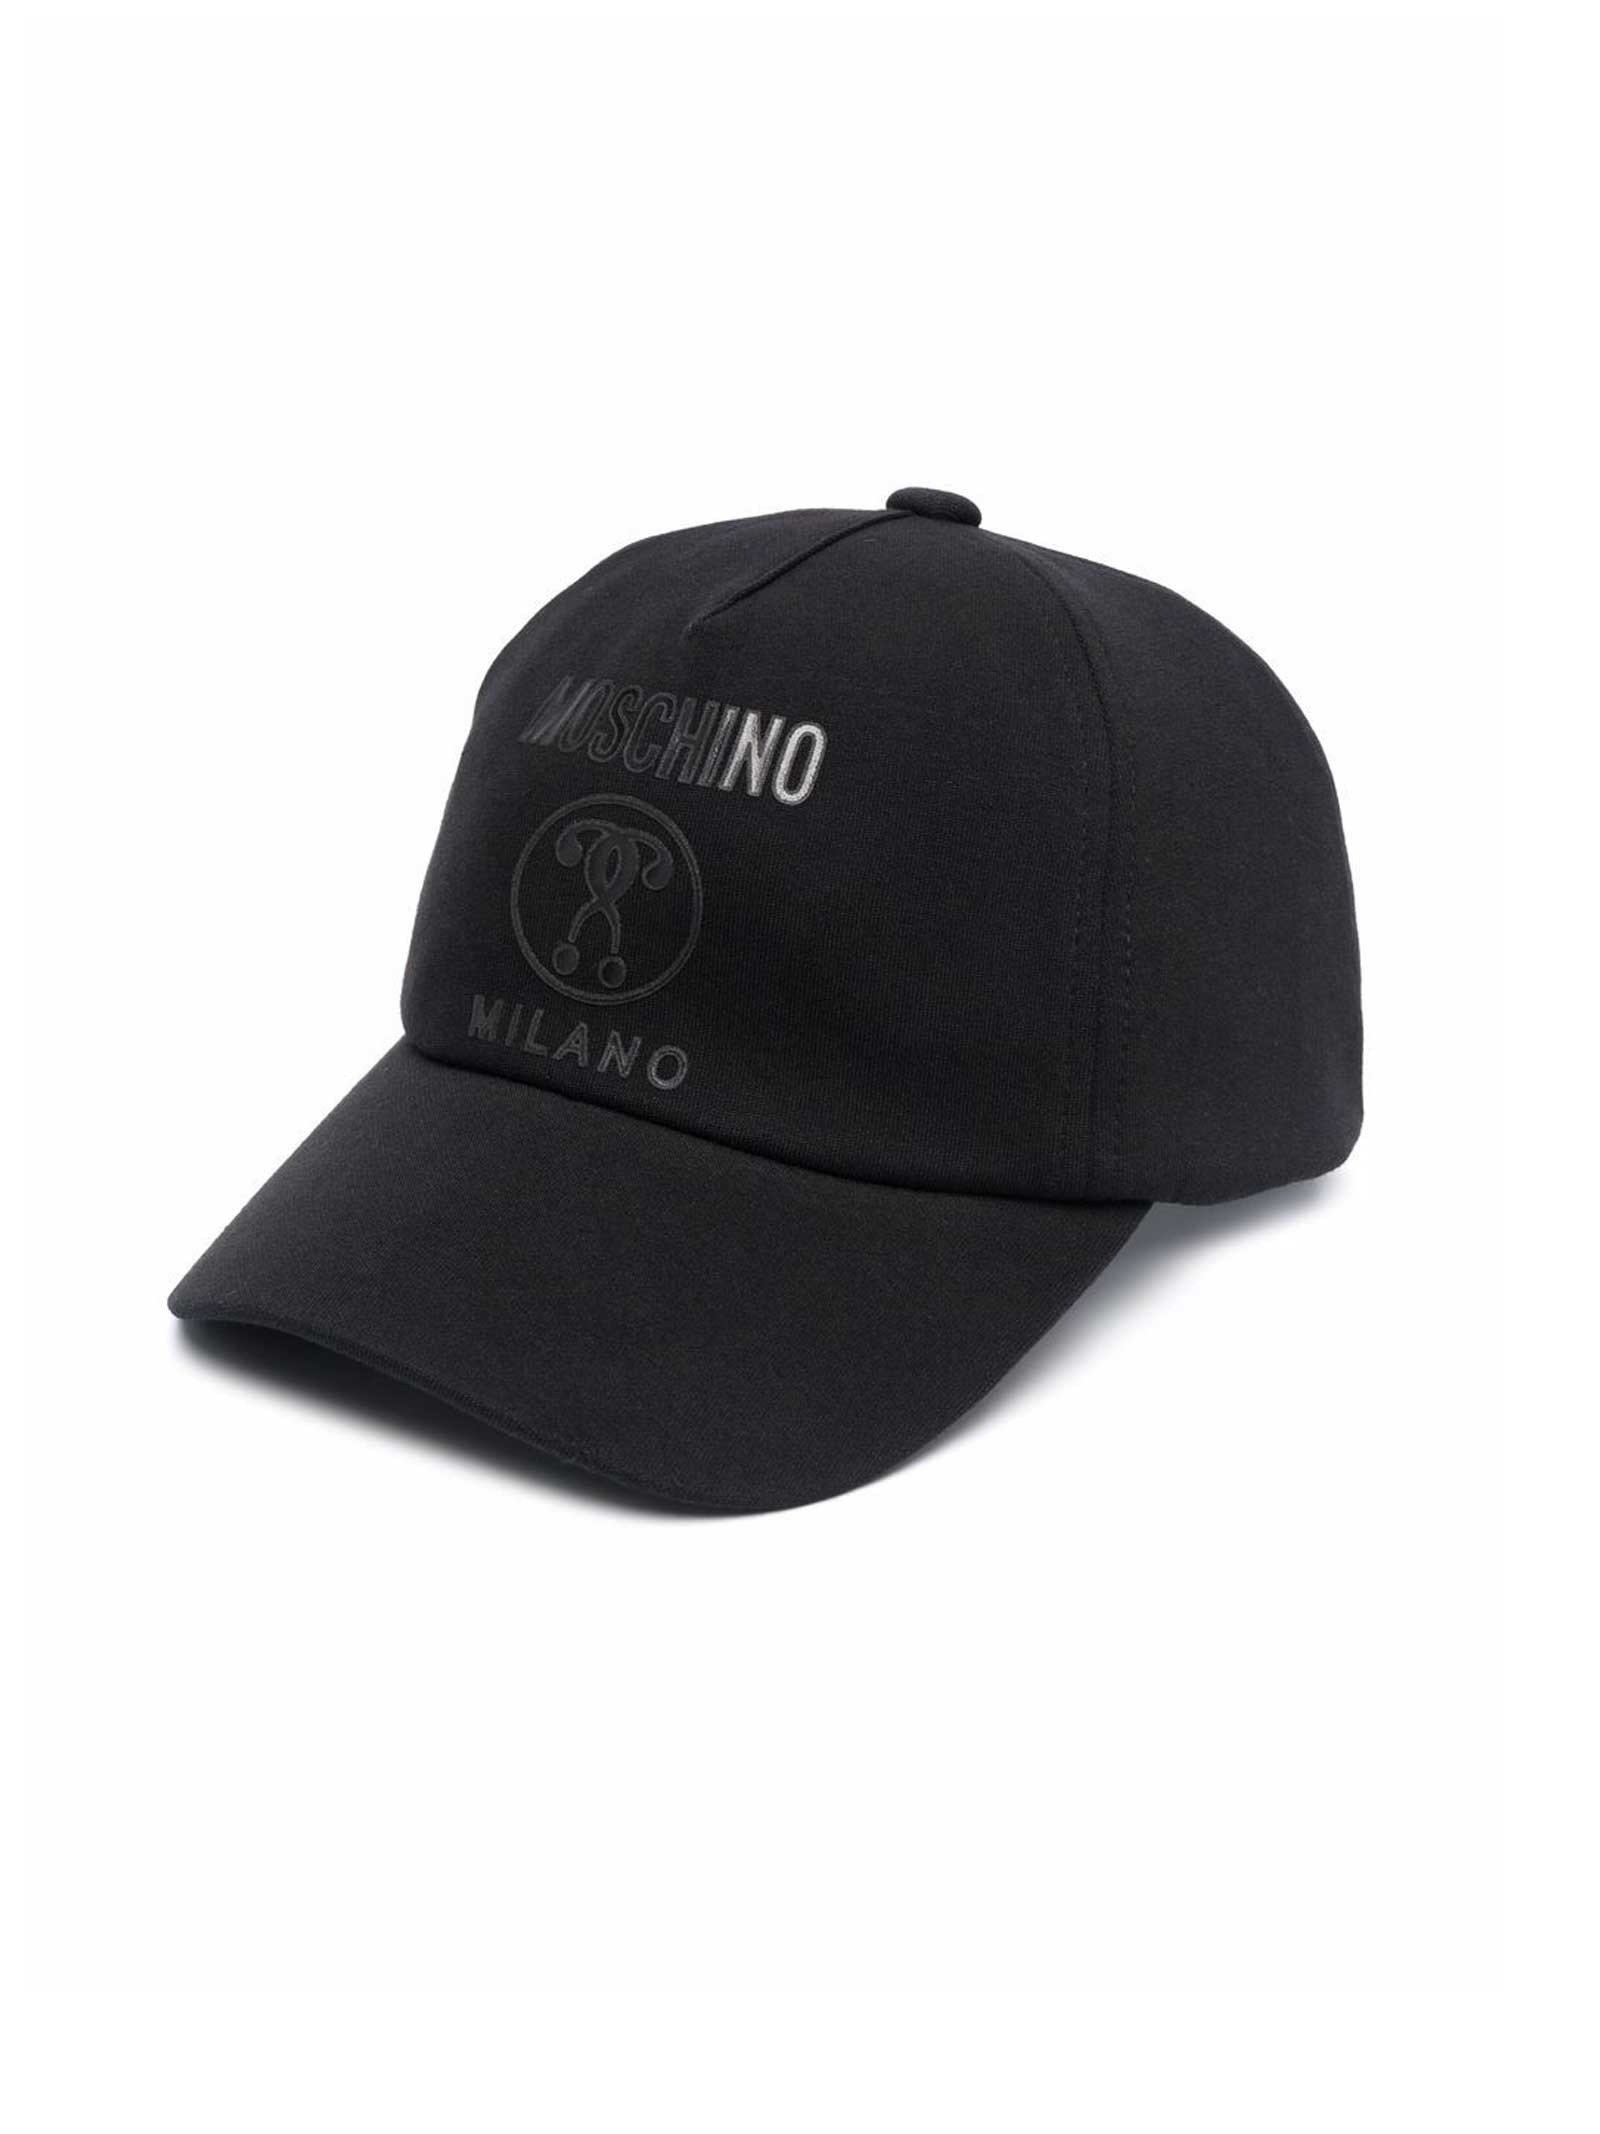 Moschino Black Hat With Logo